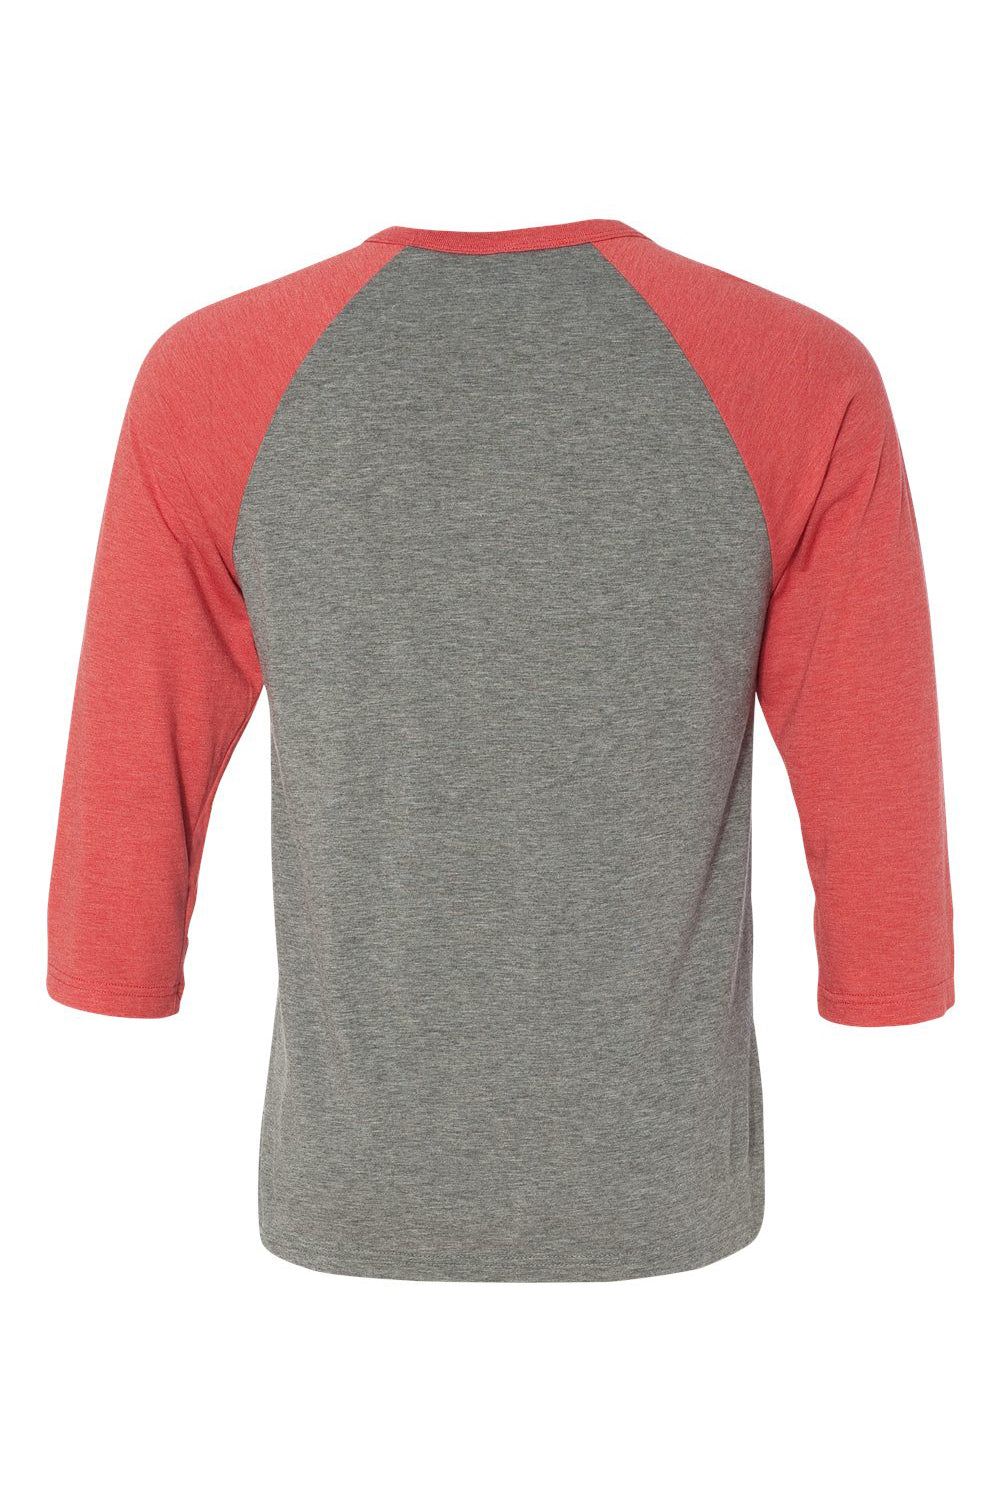 Bella + Canvas BC3200/3200 Mens 3/4 Sleeve Crewneck T-Shirt Grey/Light Red Flat Back